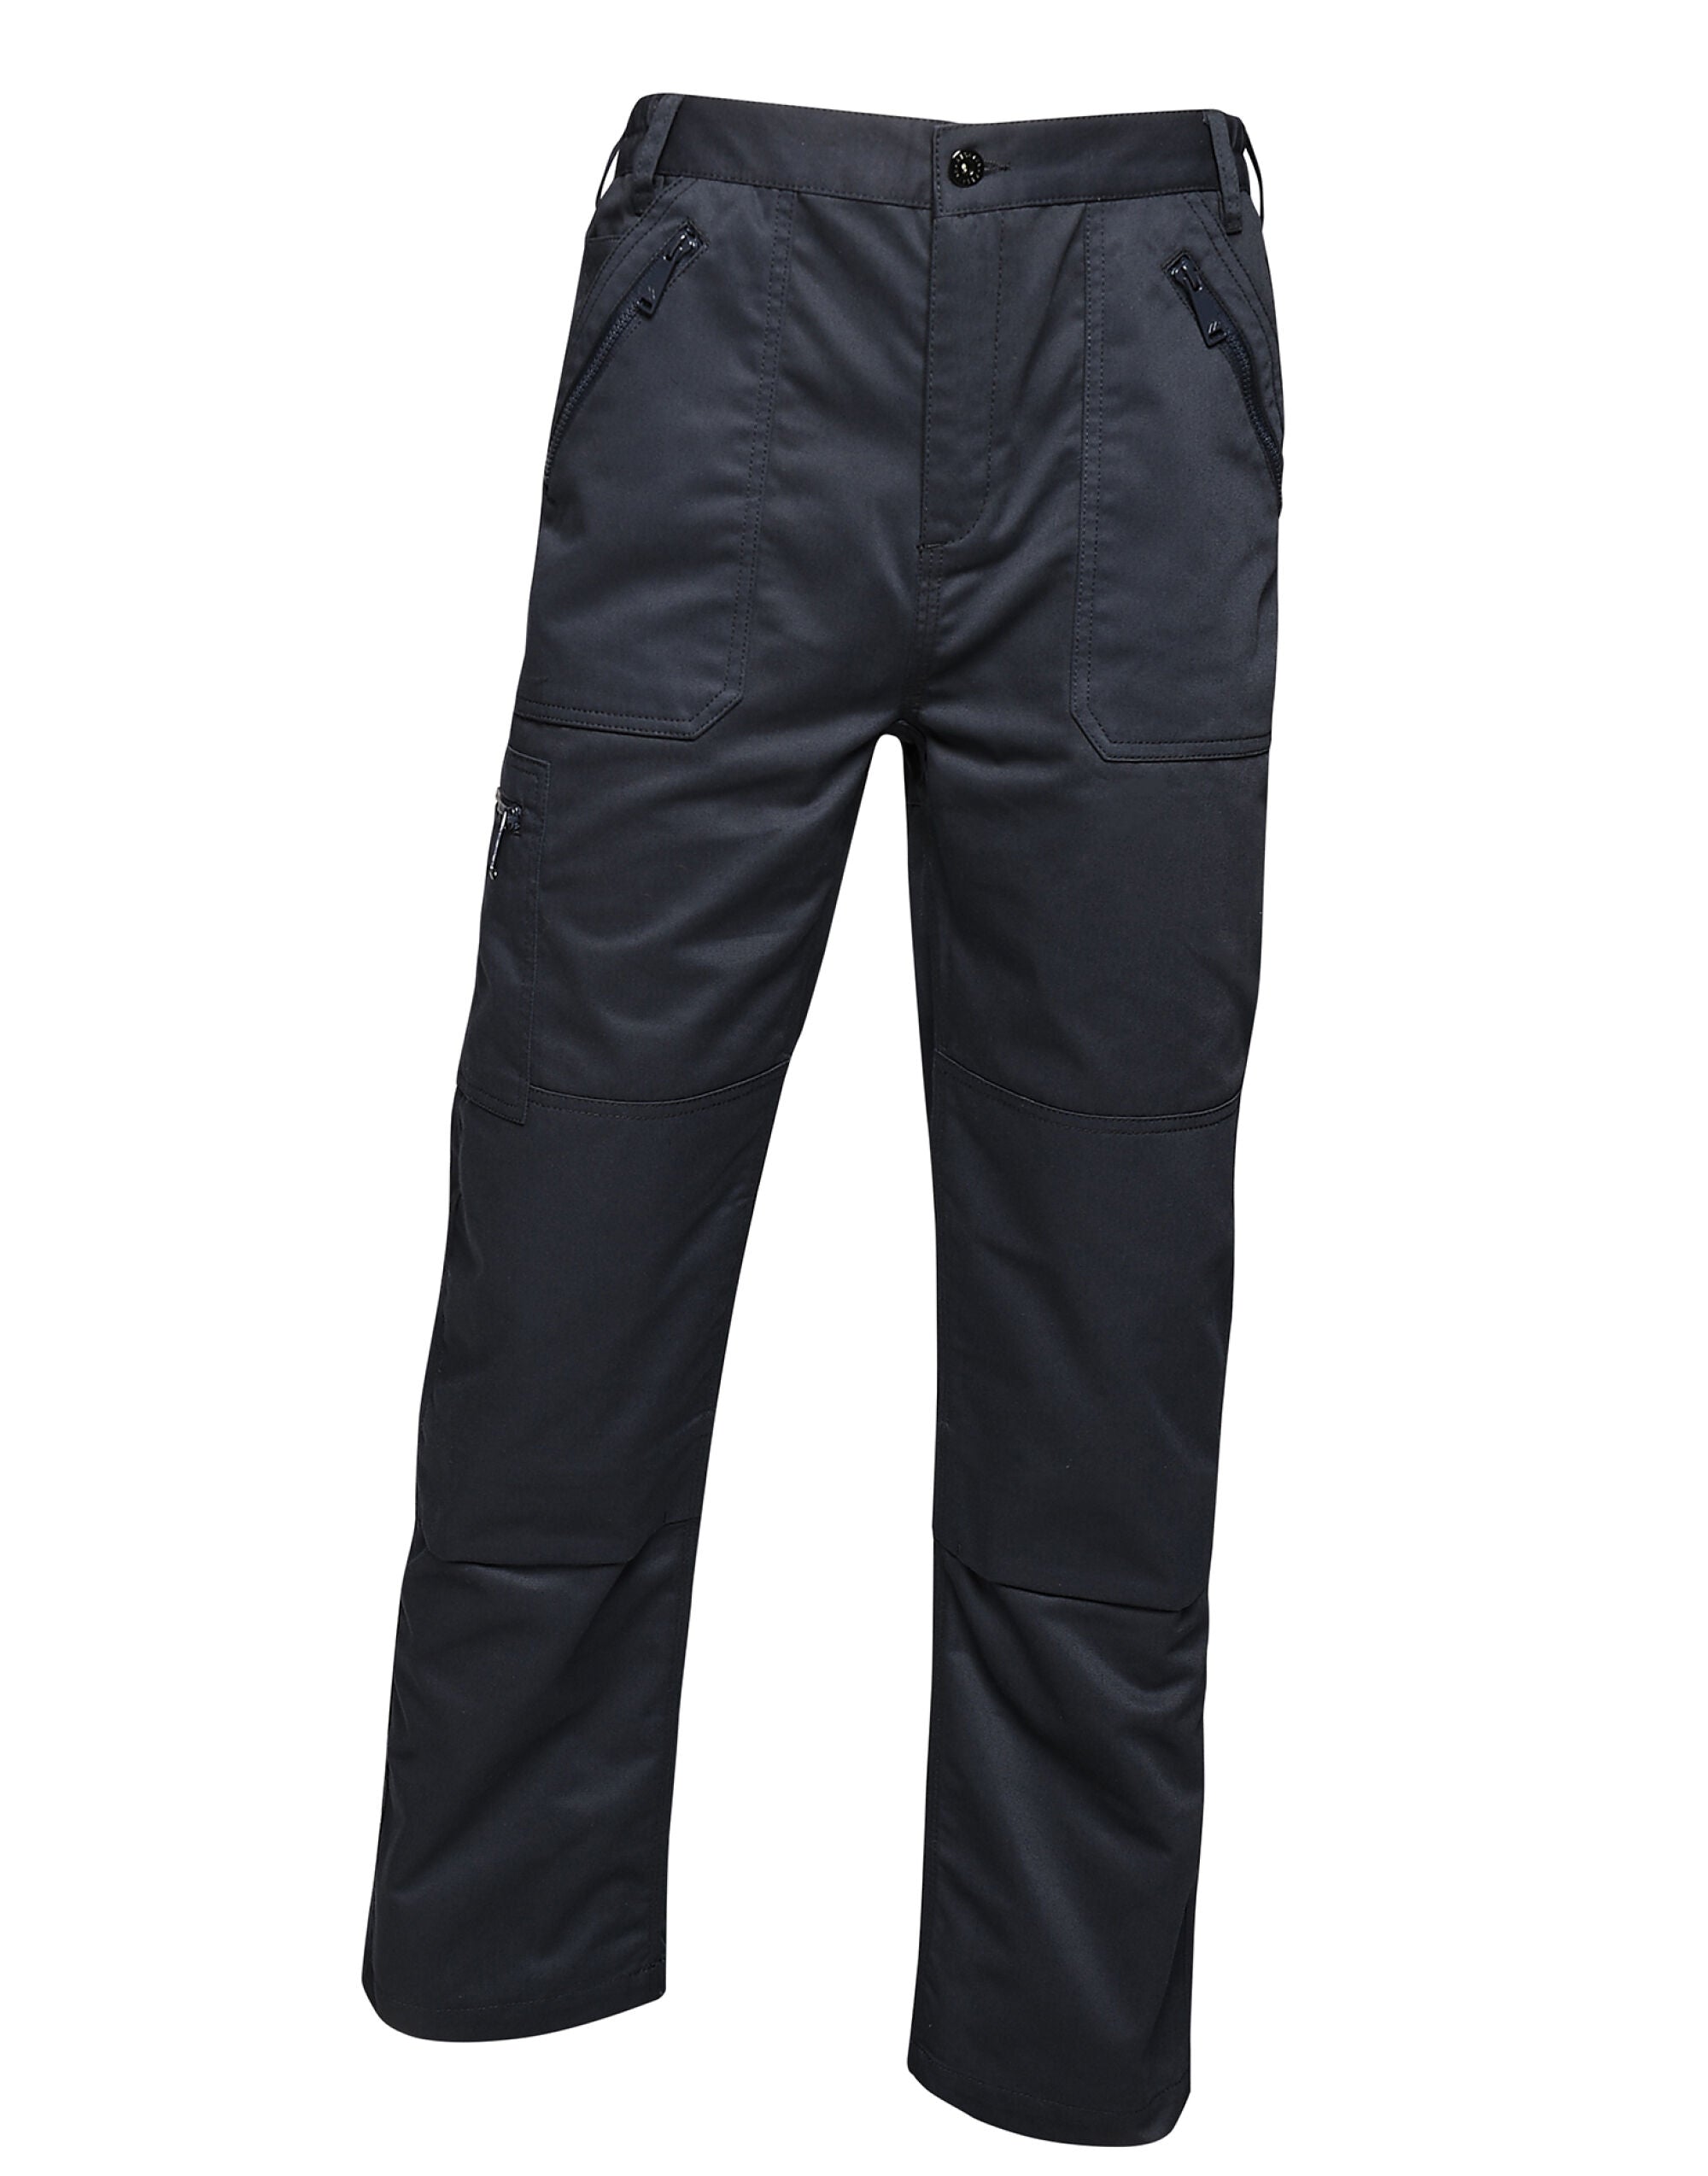 REGATTA PROFESSIONAL Pro Action Trouser (L) Durable water repellent finish (TRJ600L)